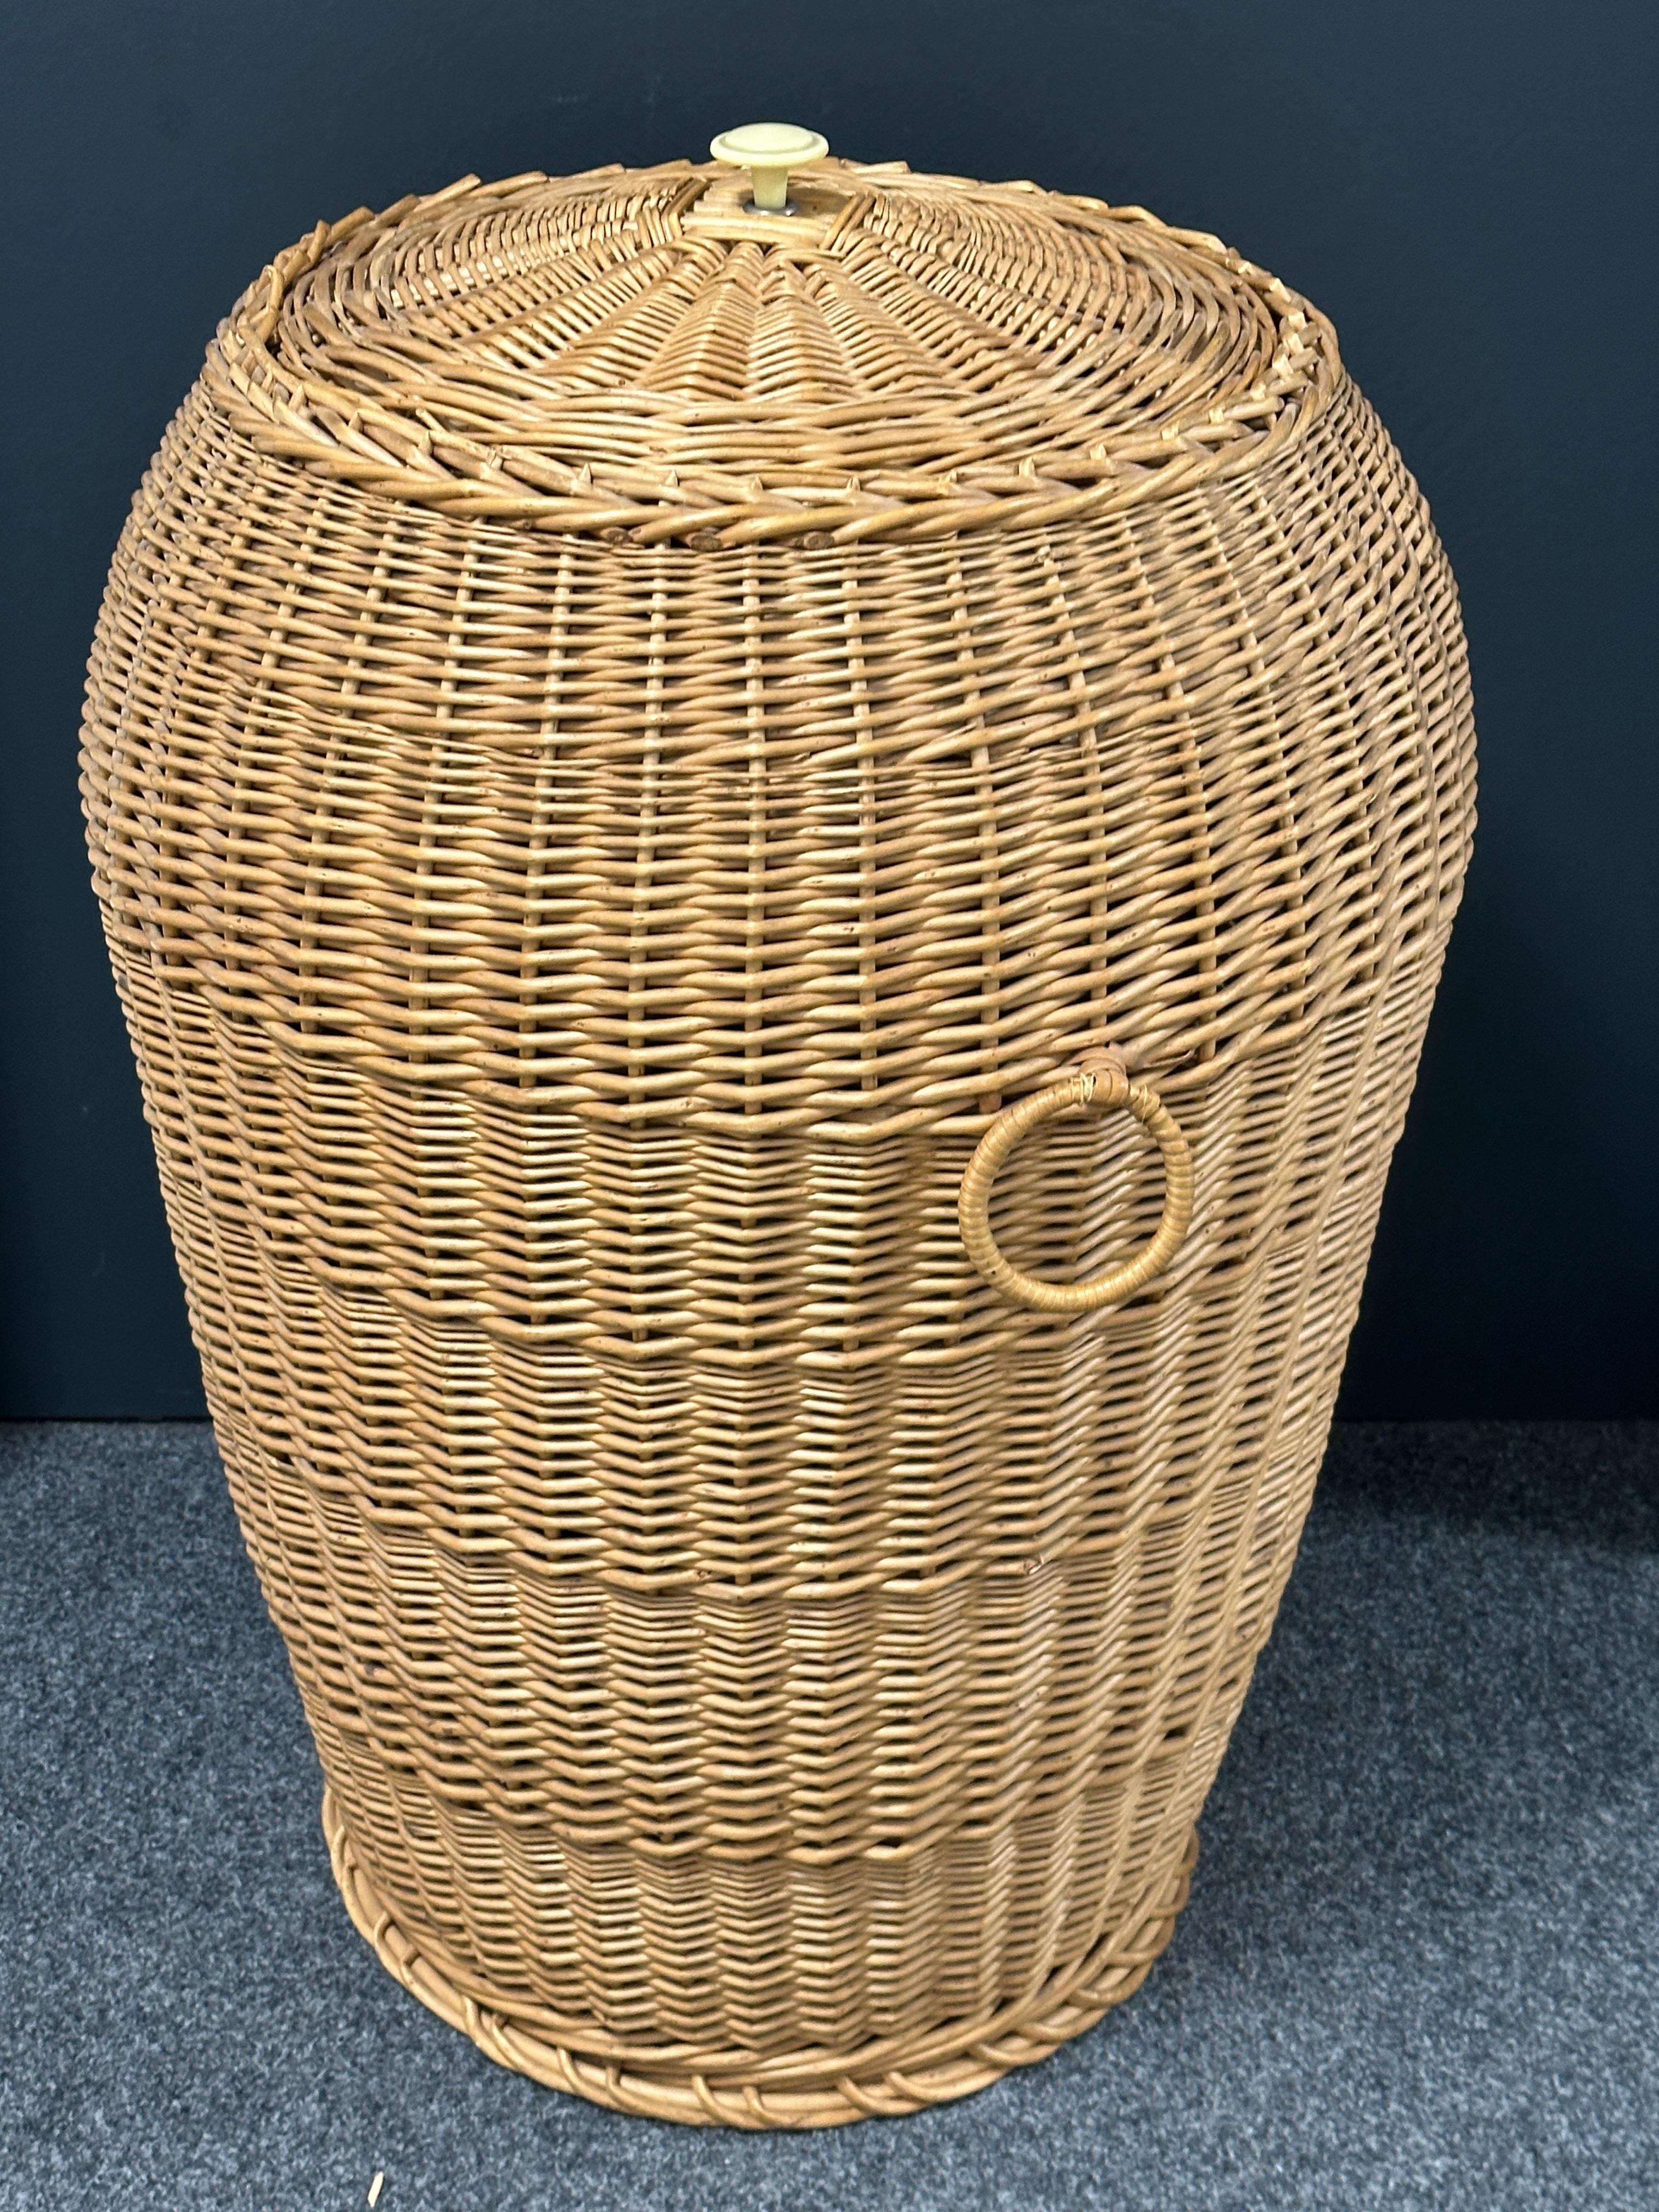 Monumental Vintage Midcentury Wicker Laundry Basket Hamper, 1970s, German For Sale 8